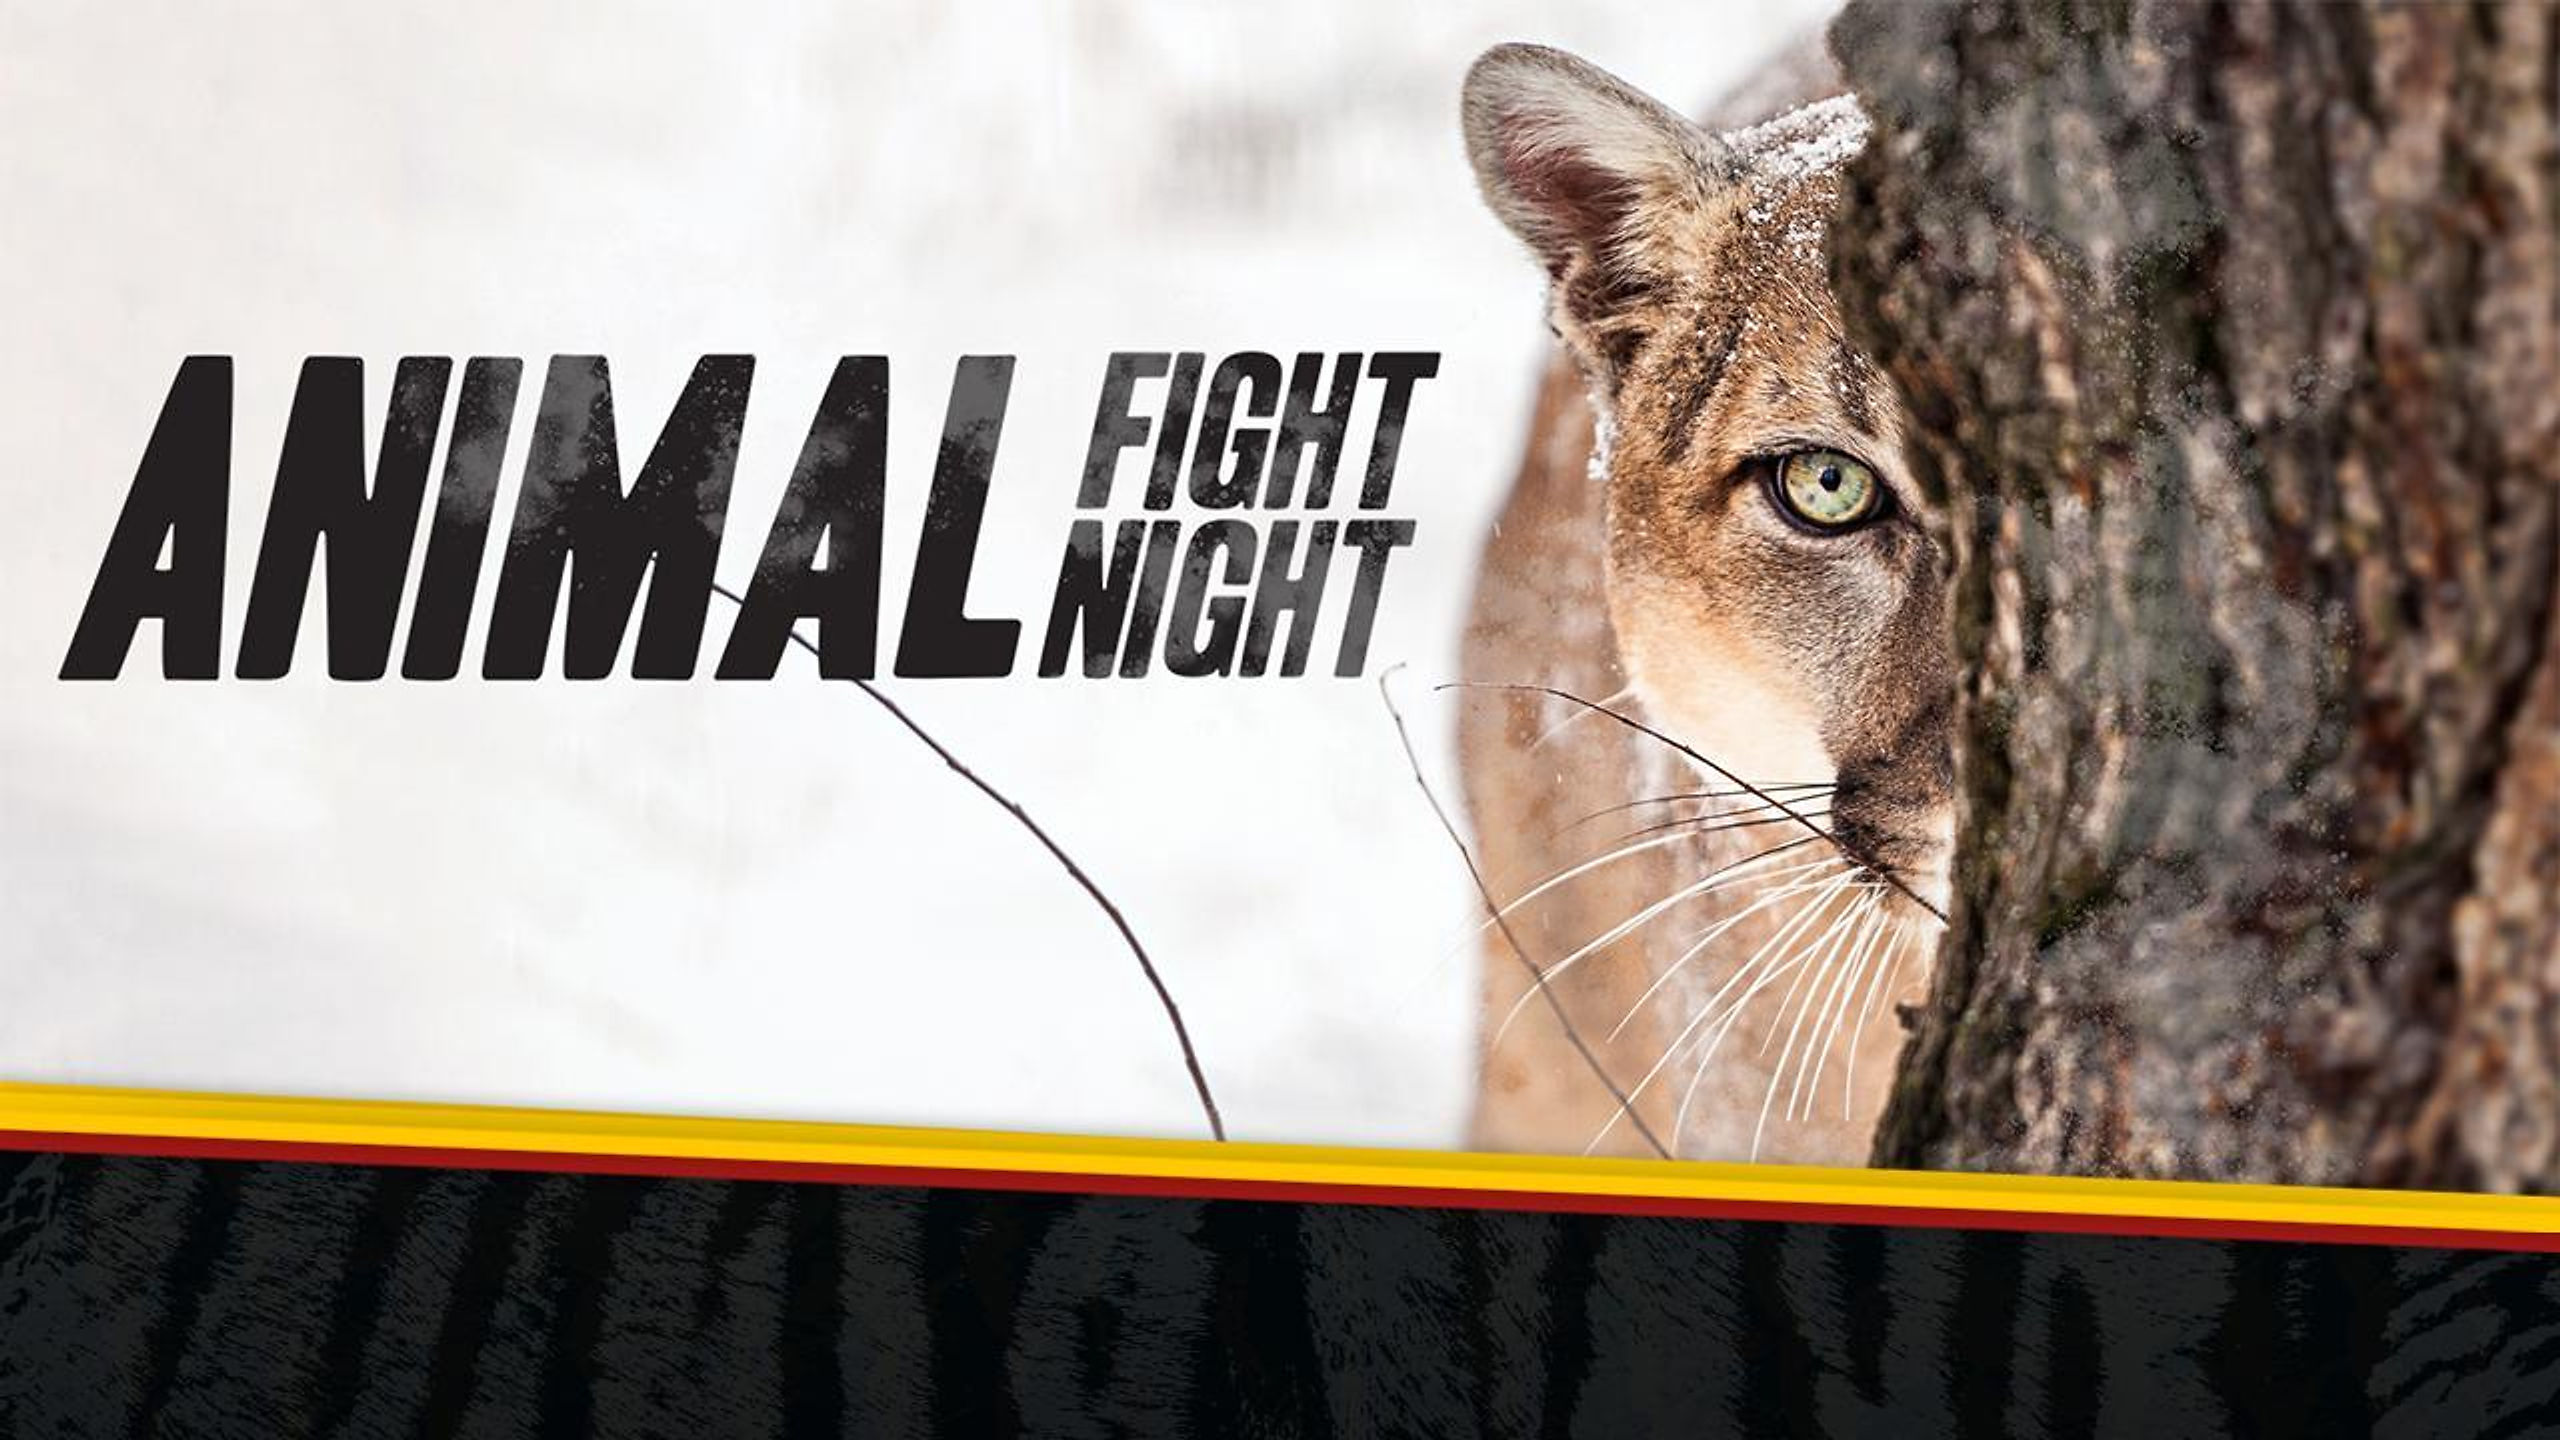 Animal Fight Night 3 - Nat Geo